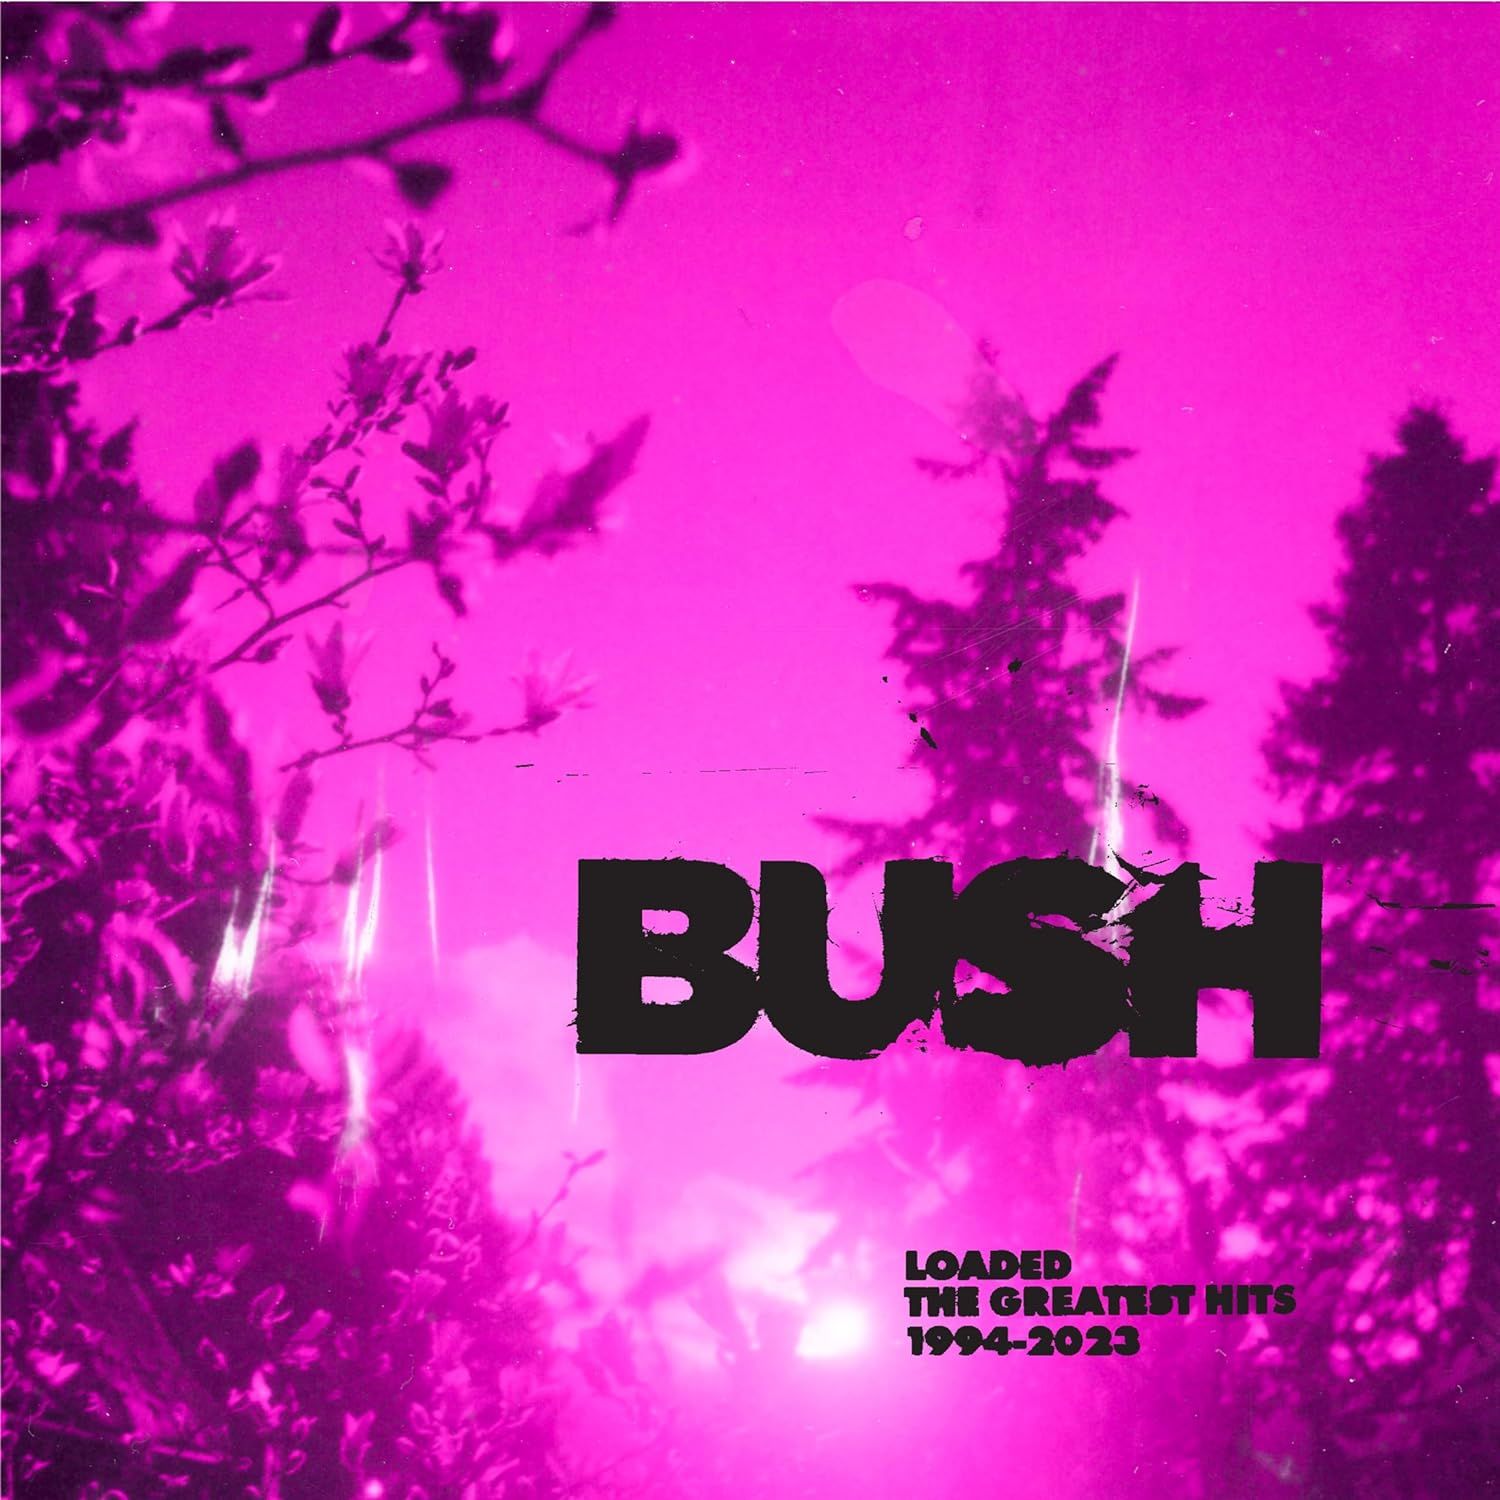 Bush - Loaded: The Greatest Hits 1994-2023 (2CD) - CD - New